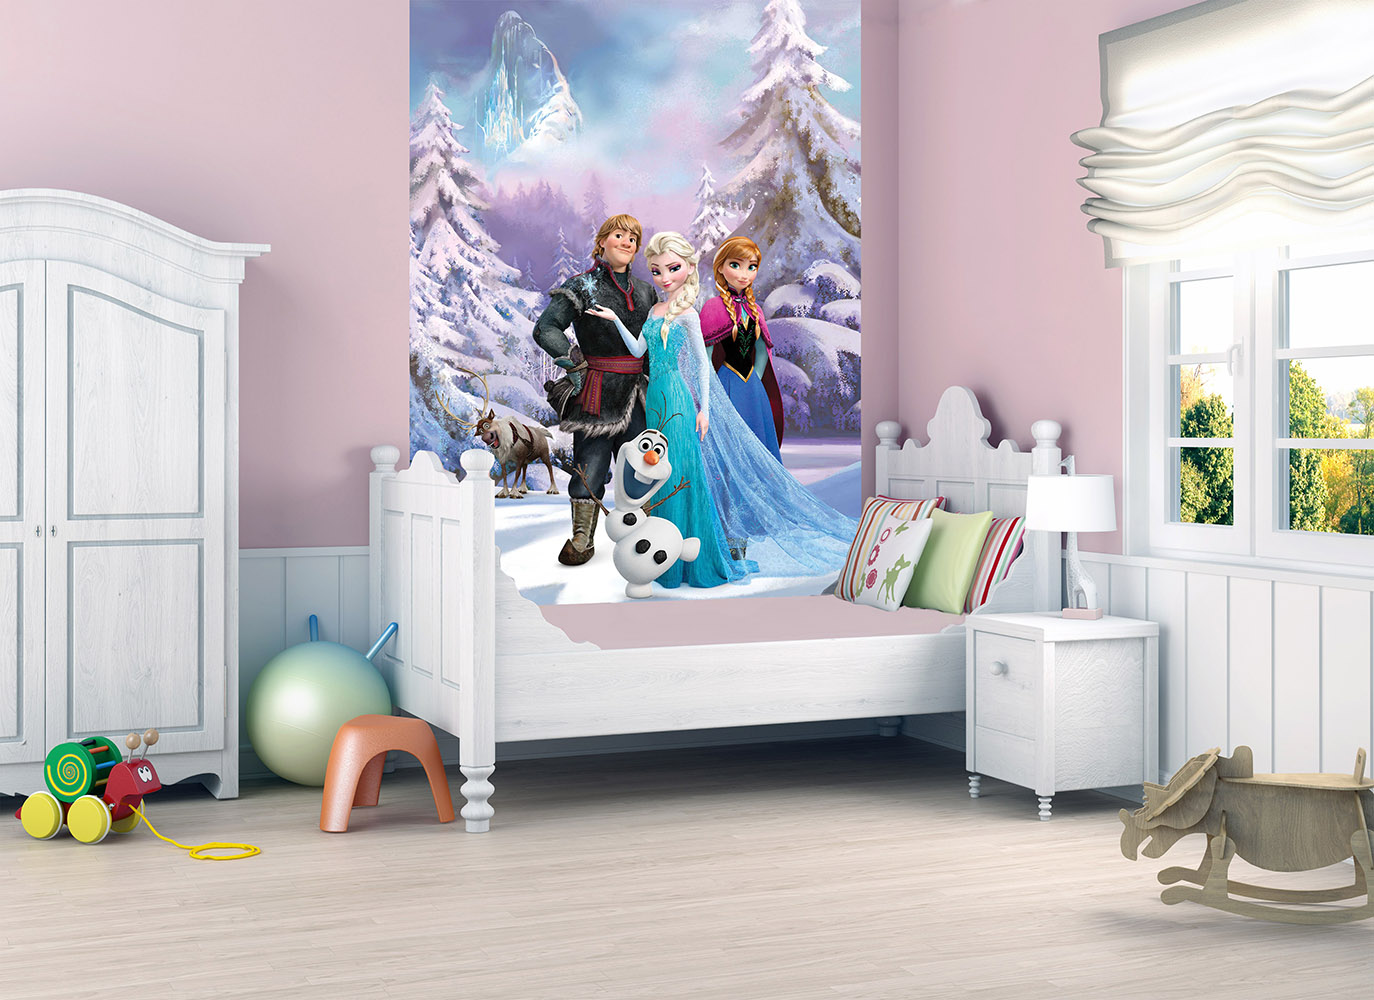 frozen wallpaper for bedroom,room,fashion,wallpaper,furniture,interior design